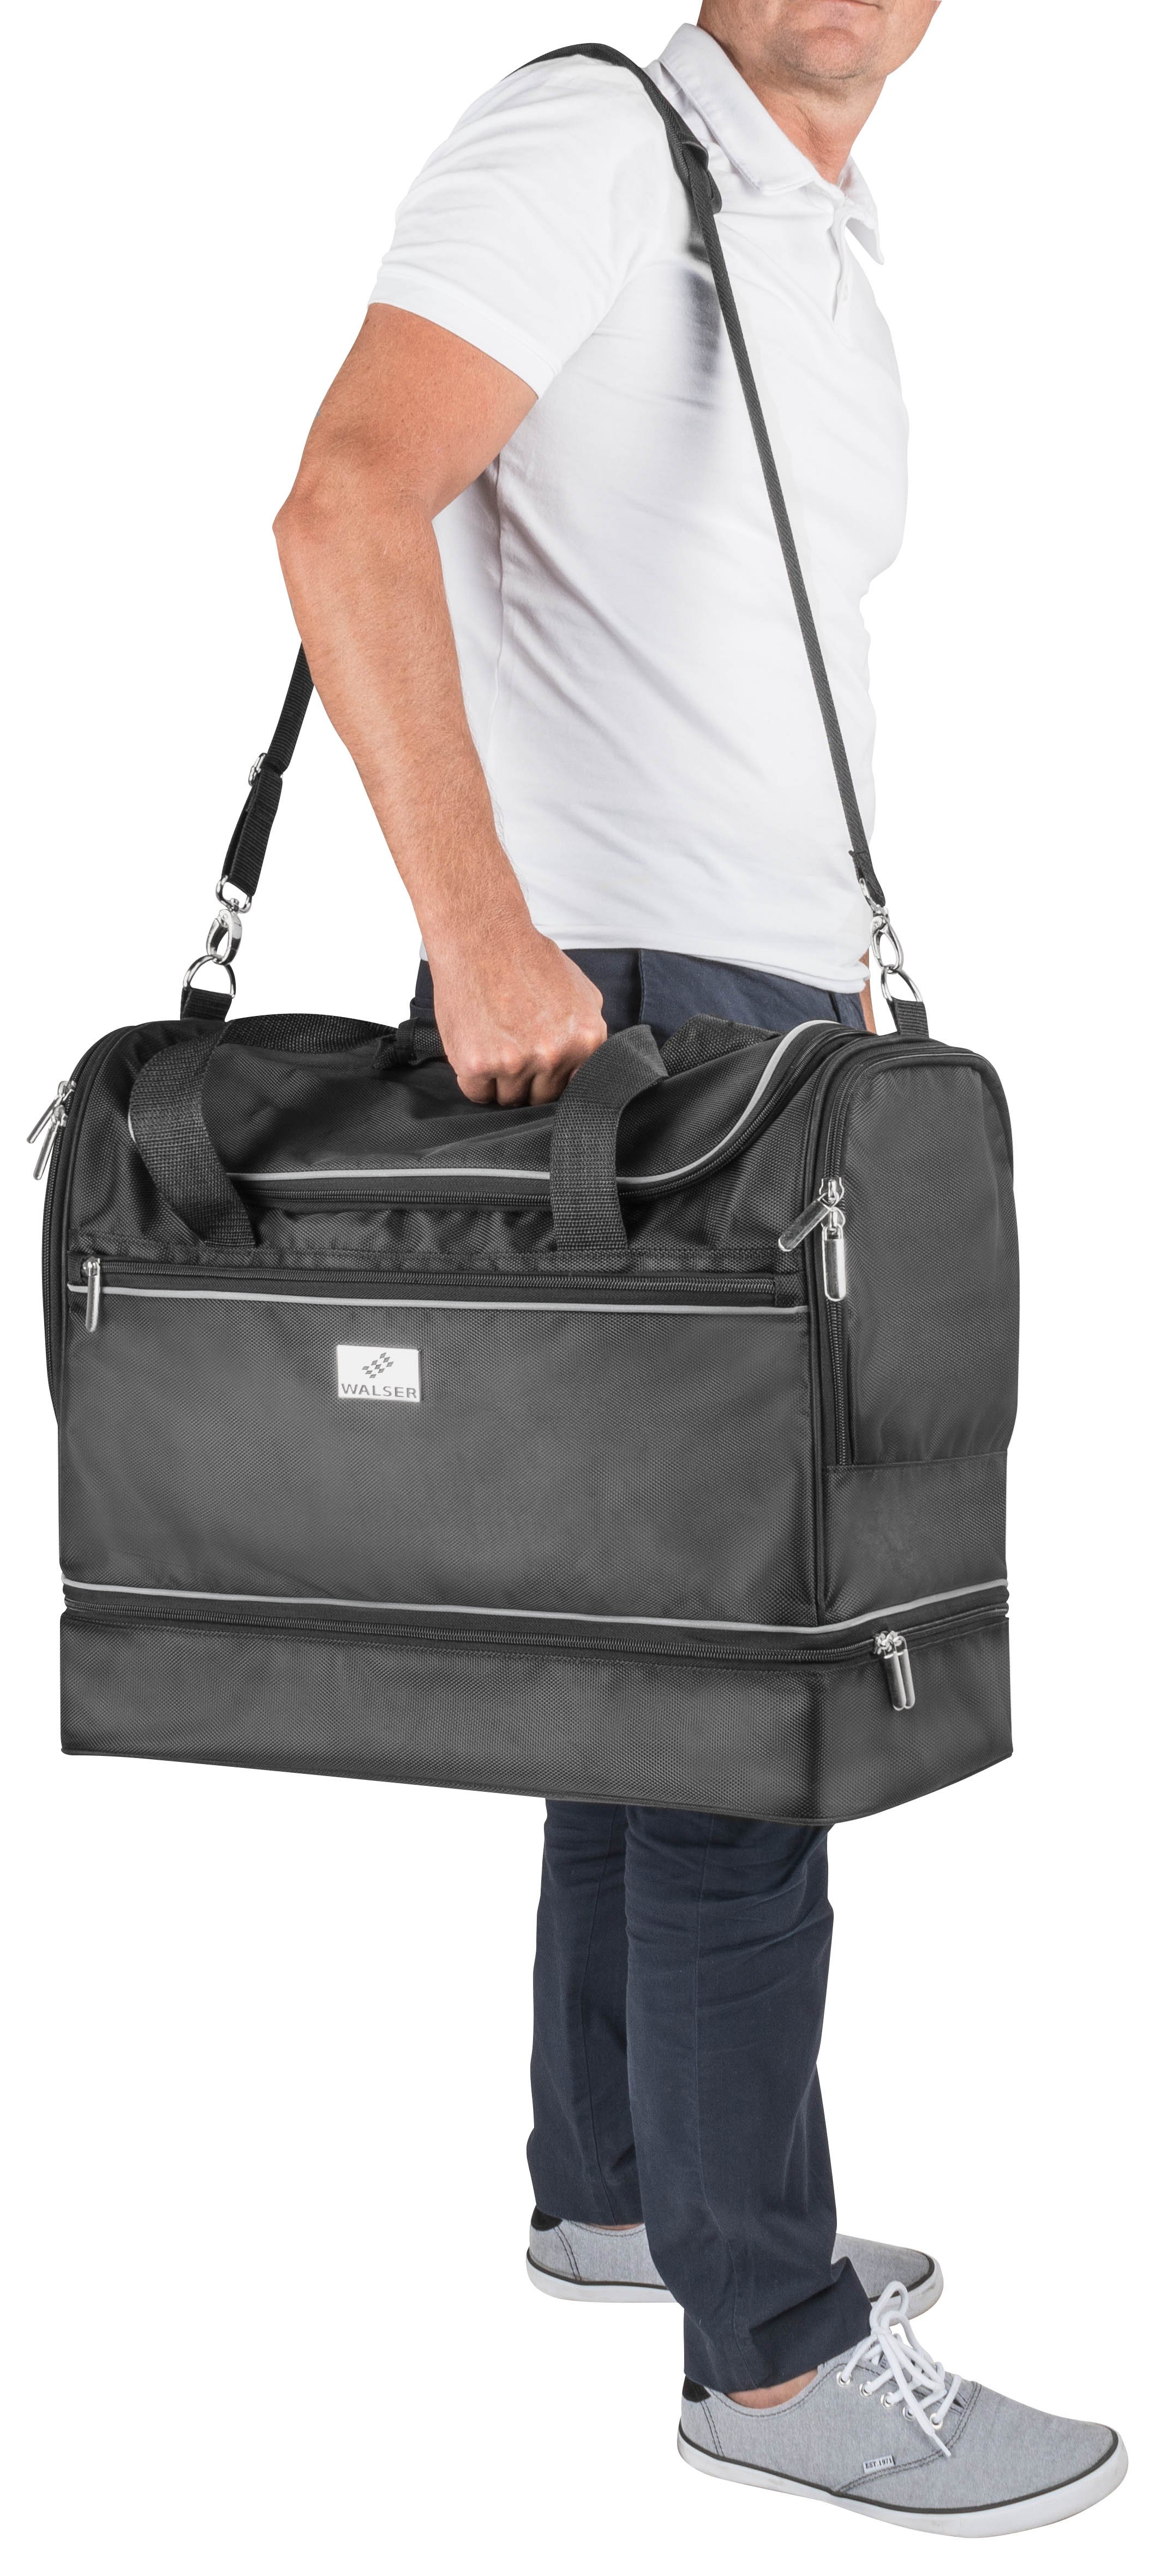 Carbags sports bag 45x30x45cm black